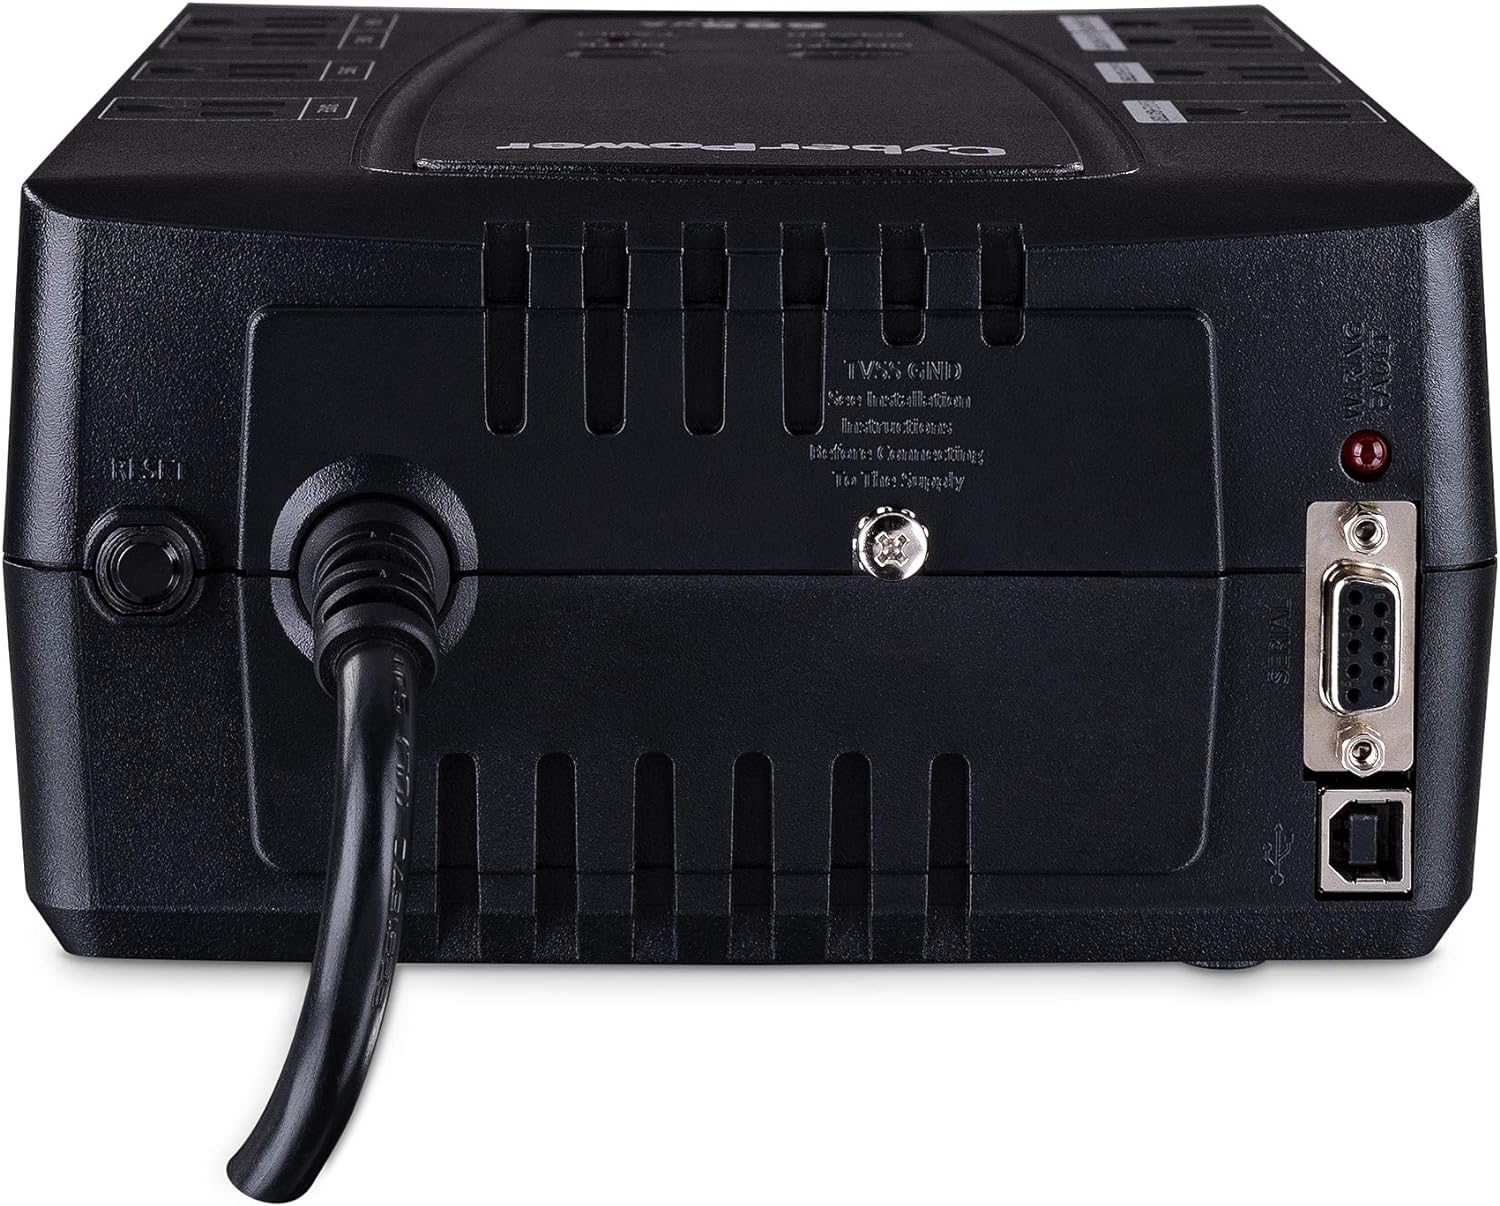 Cyberpower 685 VA/390 W Battery Backup 8 Outlet (4 Surge, 4 Surege/Backup)